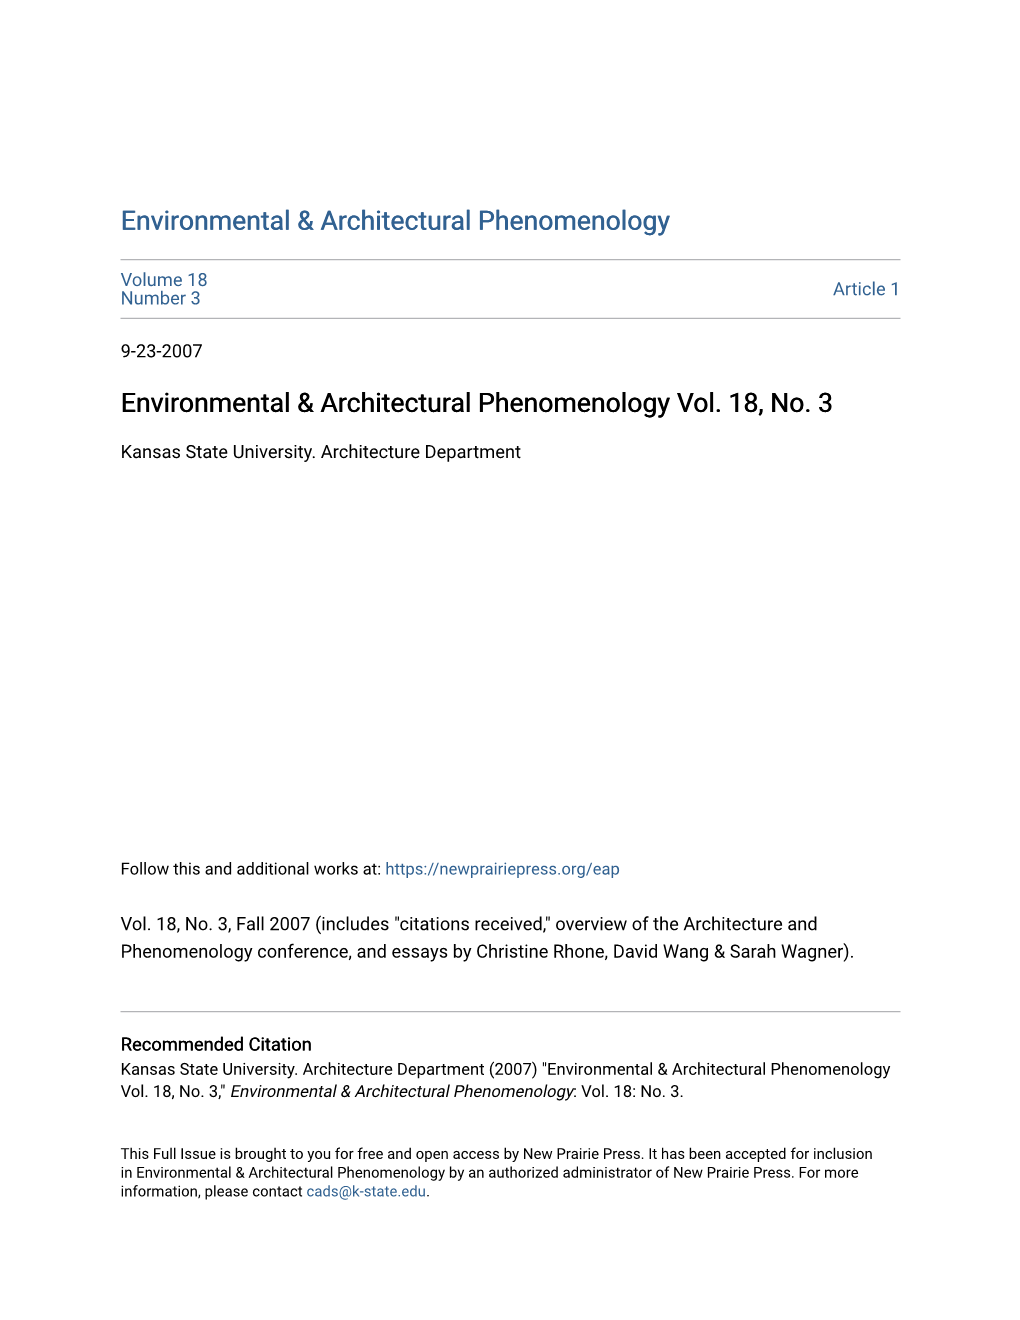 Environmental & Architectural Phenomenology Vol. 18, No. 3